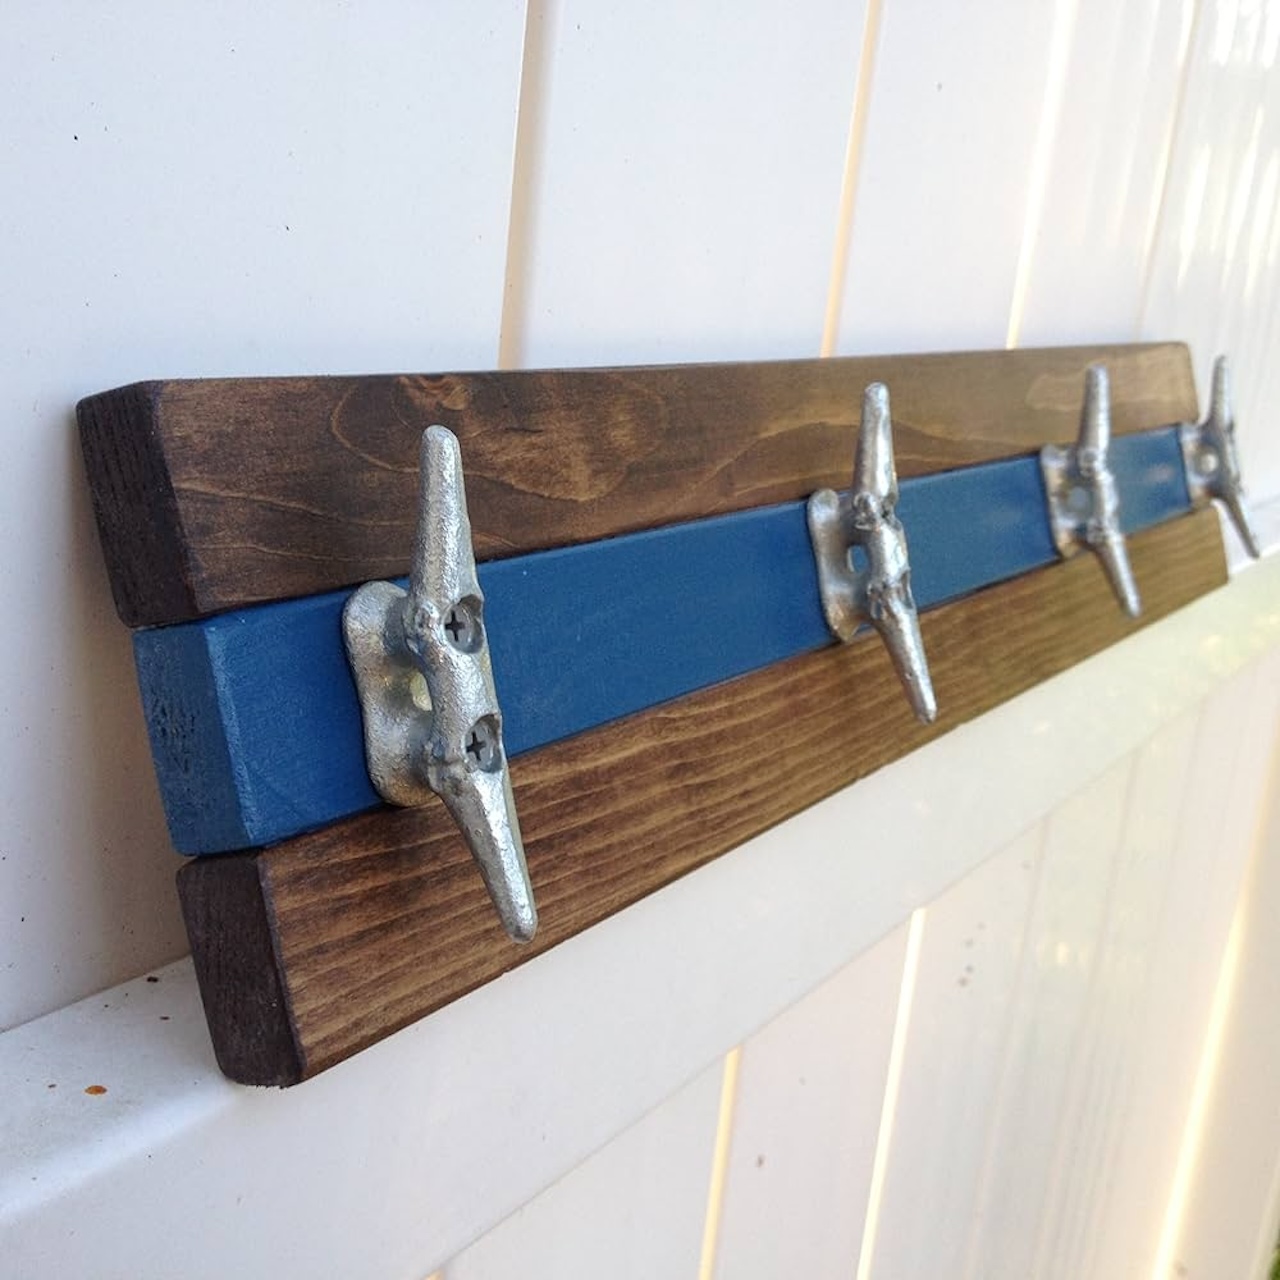 DIY  Farmhouse Pallet Wood Hook Rack for Towels, Clothes, & Bags